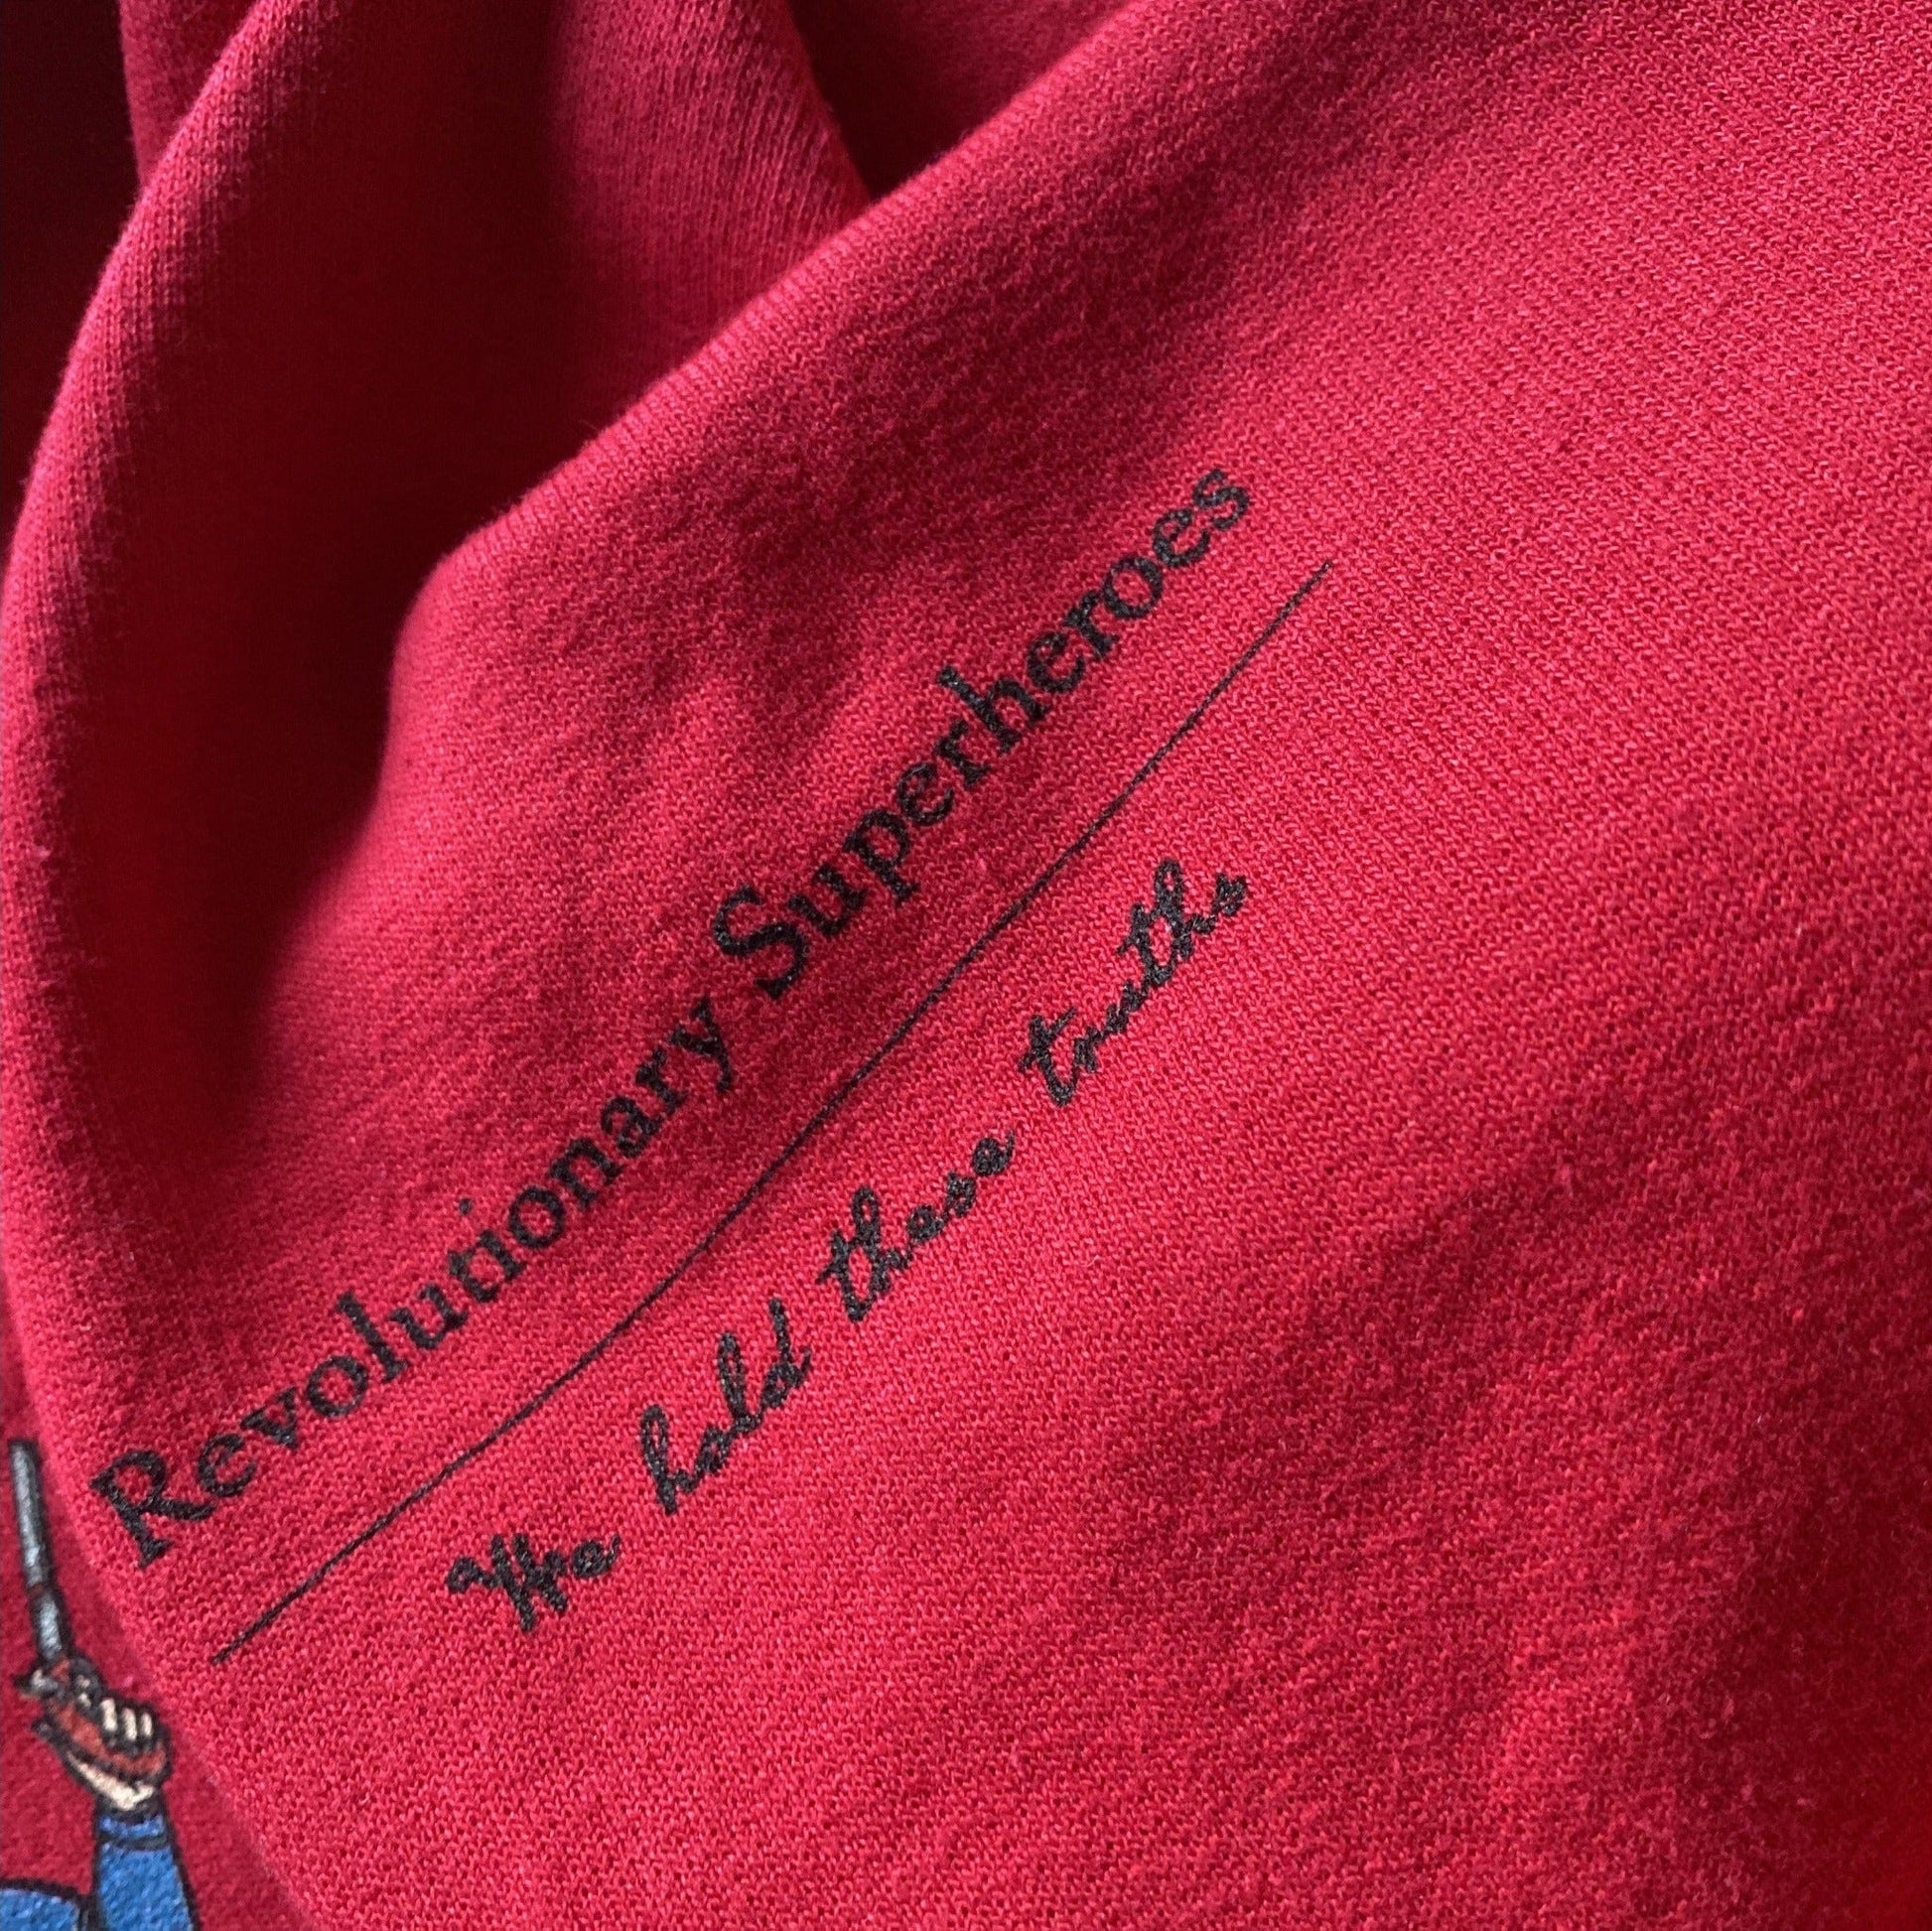 Sleeve Print on Red Ten "Revolutionary Superheroes" Hoodie and crewneck sweatshirt from the History List Store